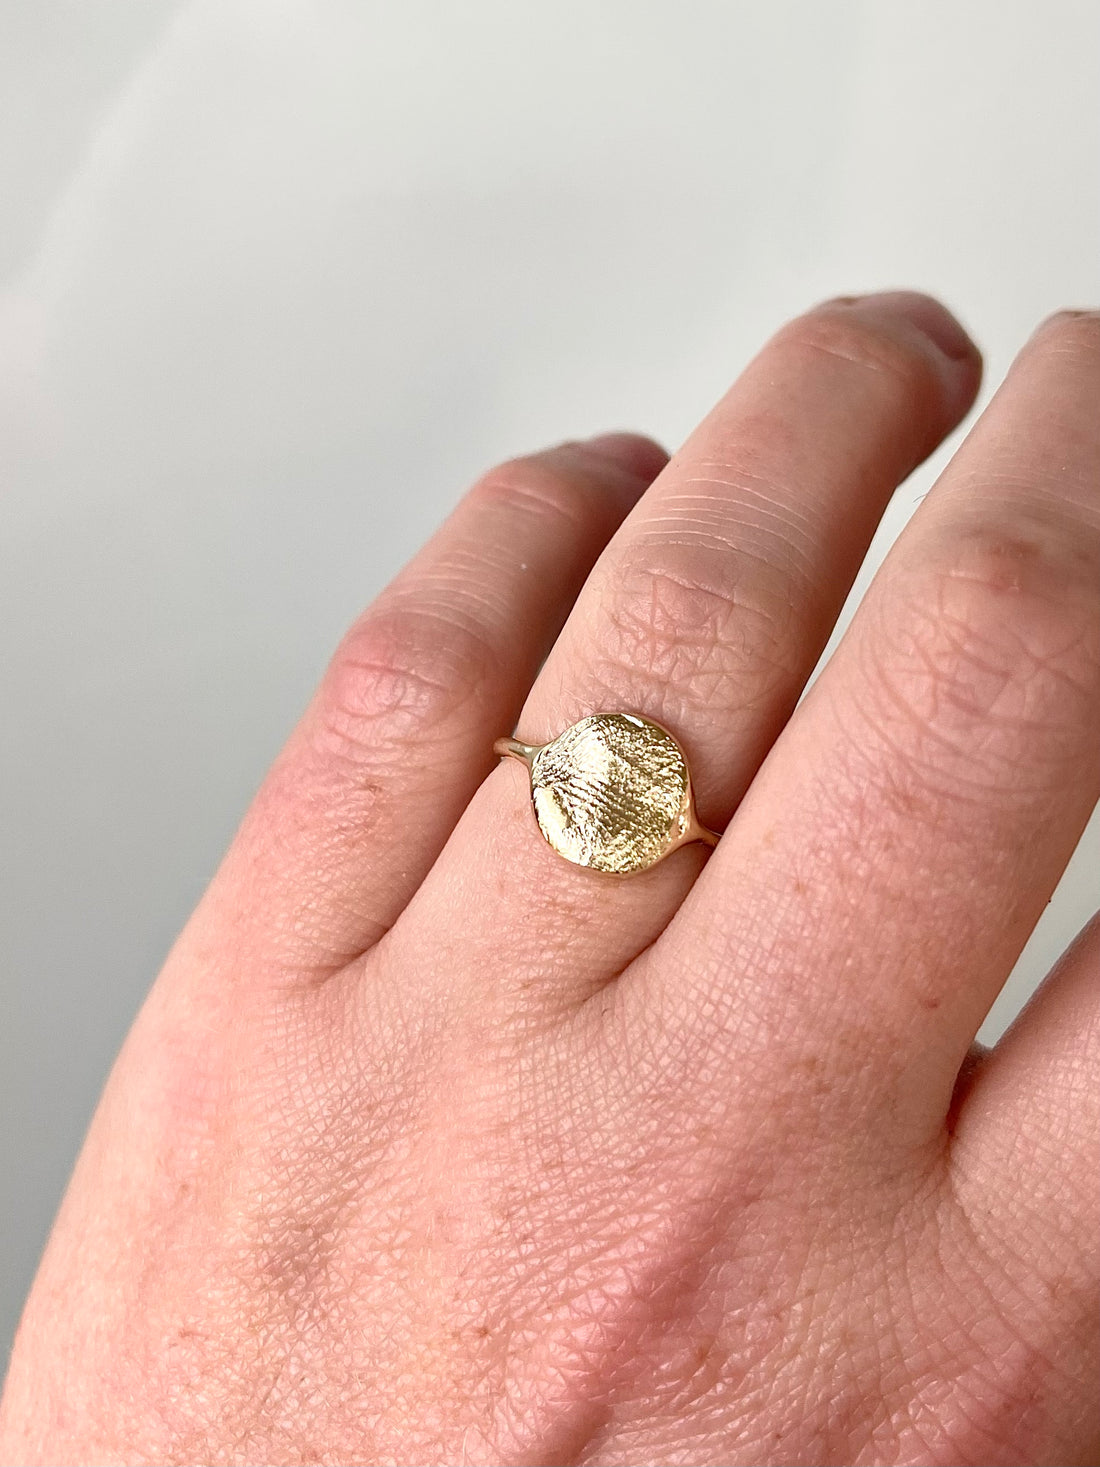 Oval or Circle Fingerprint Ring - 9ct Gold - Print Impression Kit + Ring